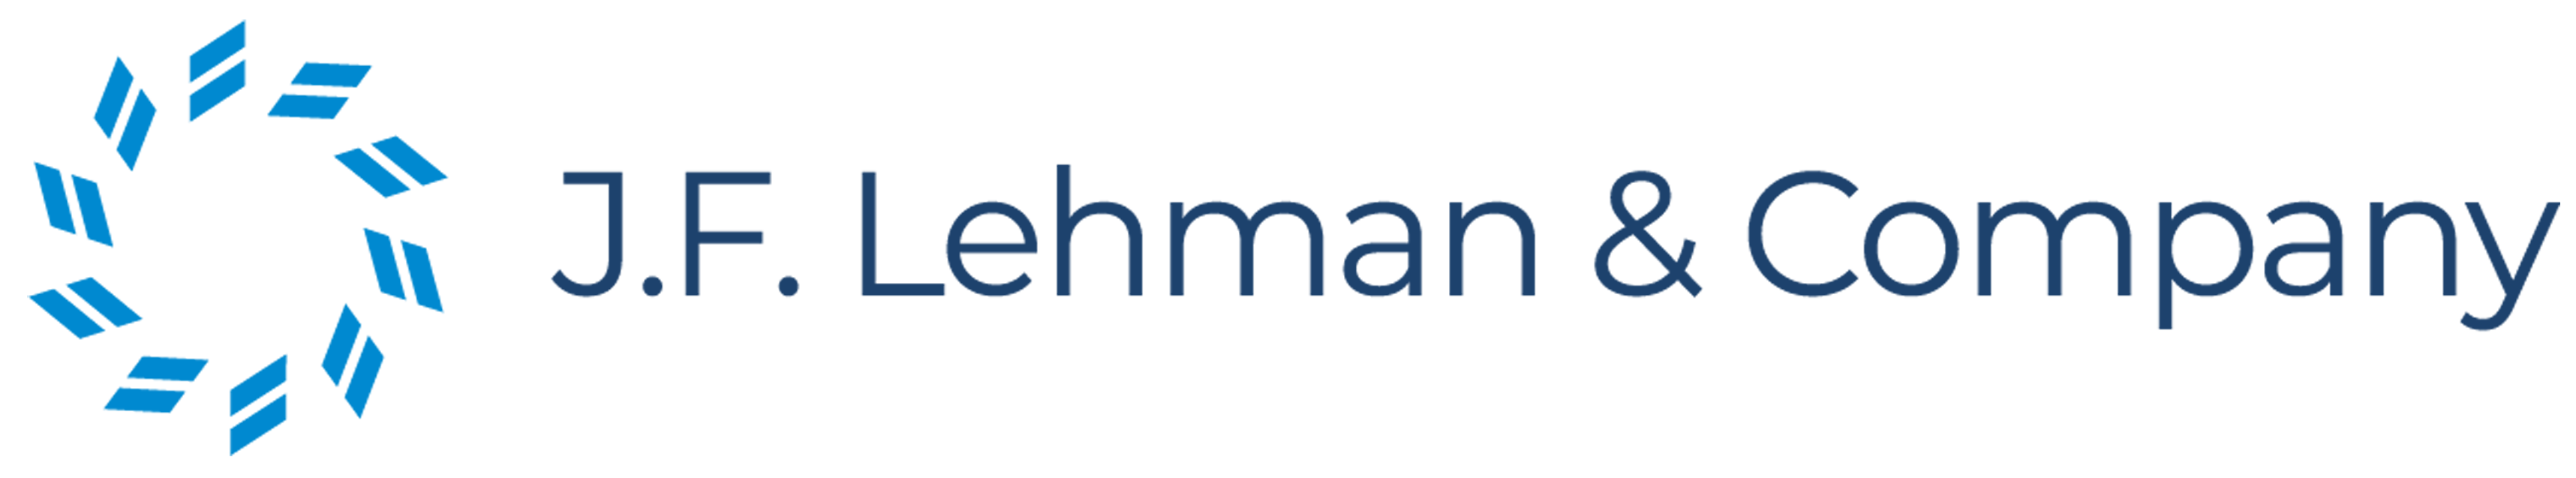 J.F. Lehman & Company Announces New Hires, July 19 2007